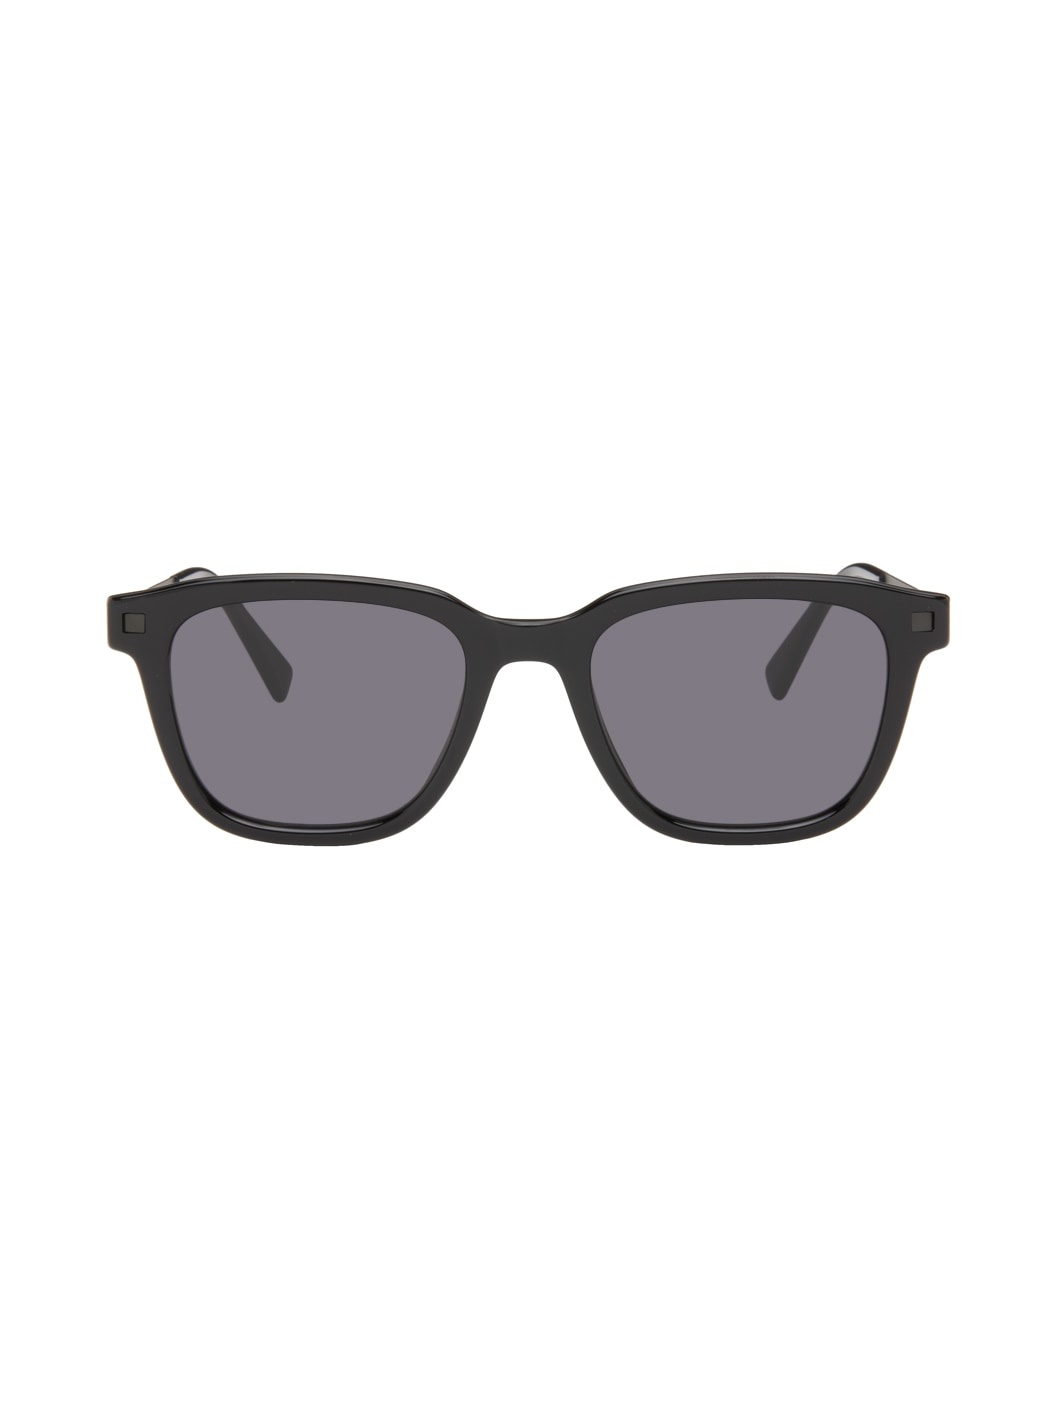 Black Holm Sunglasses - 1